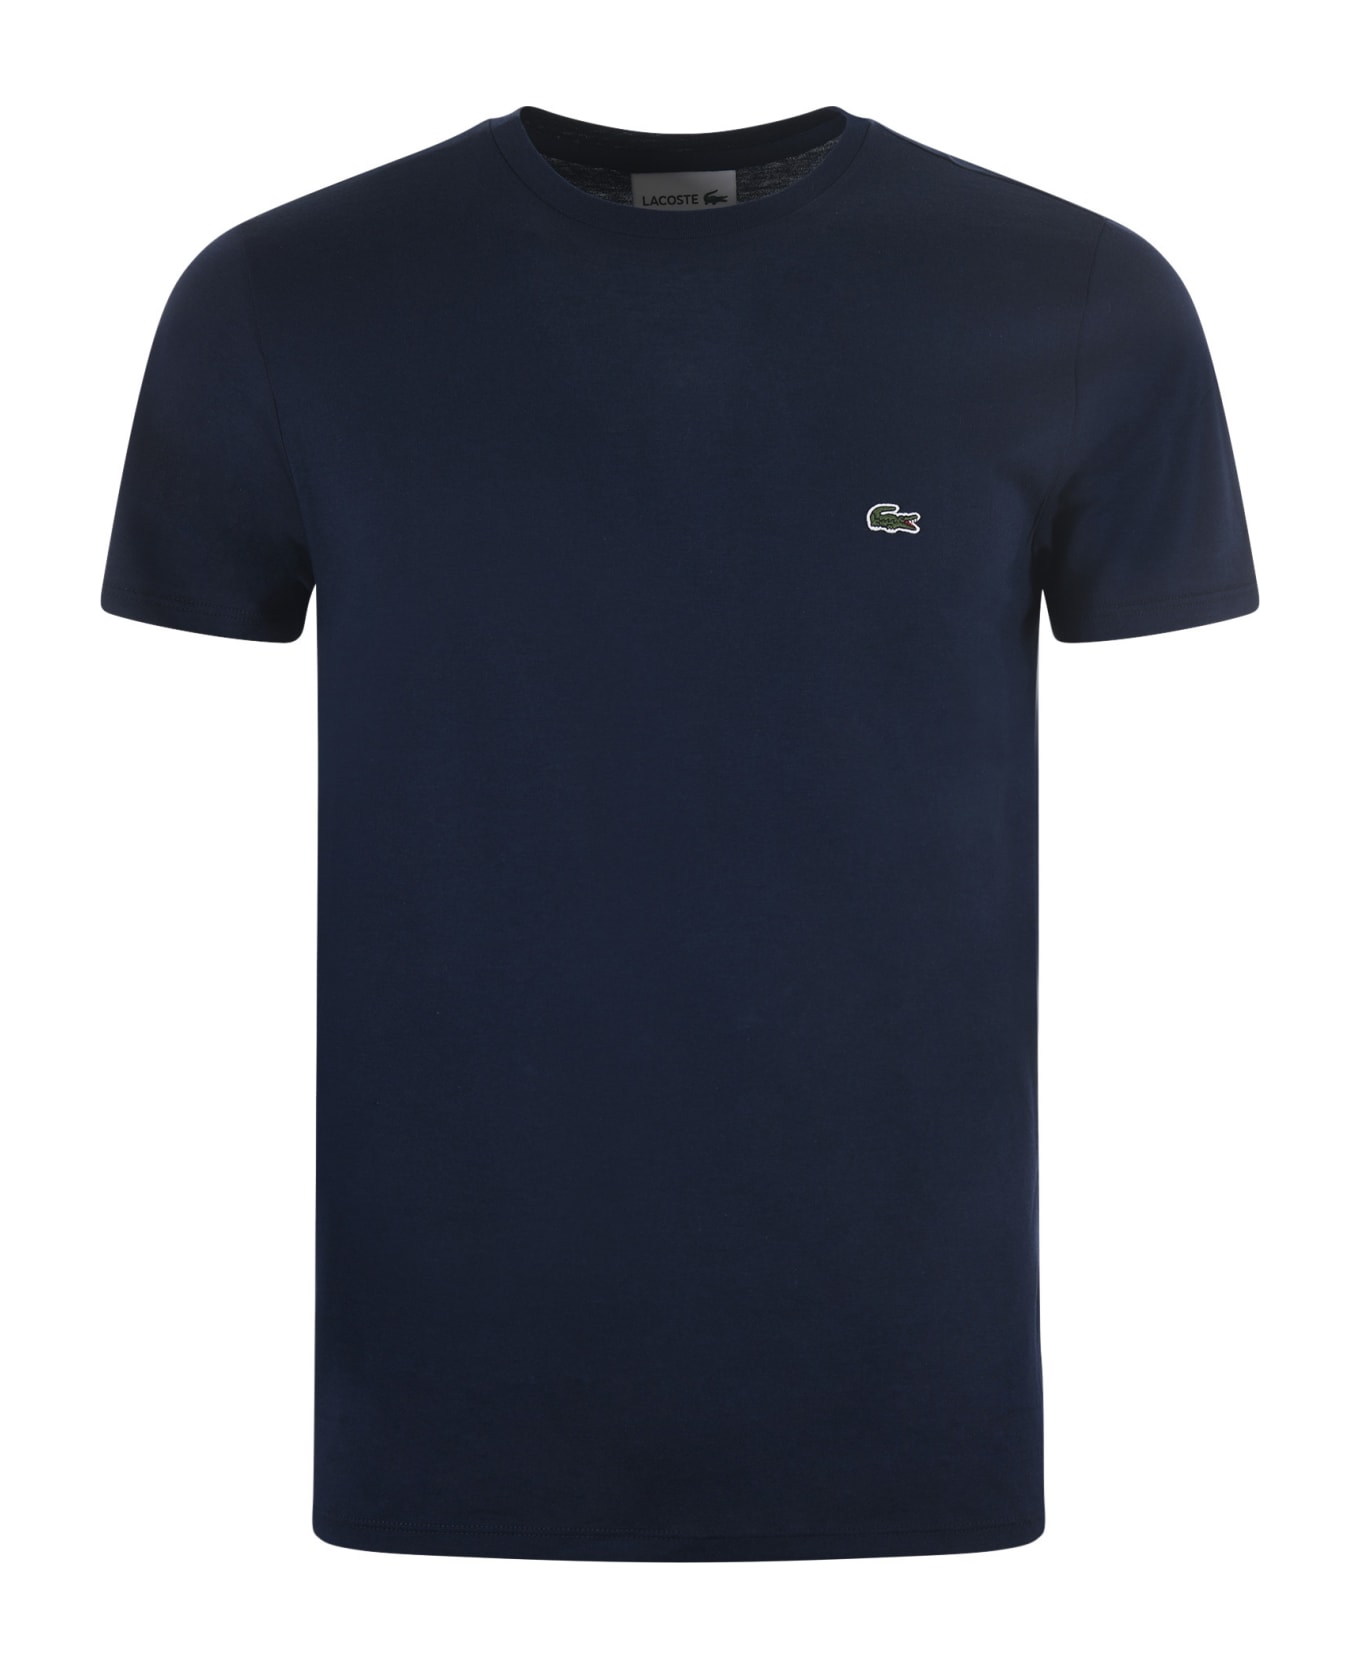 Lacoste T-shirt - Blu scuro